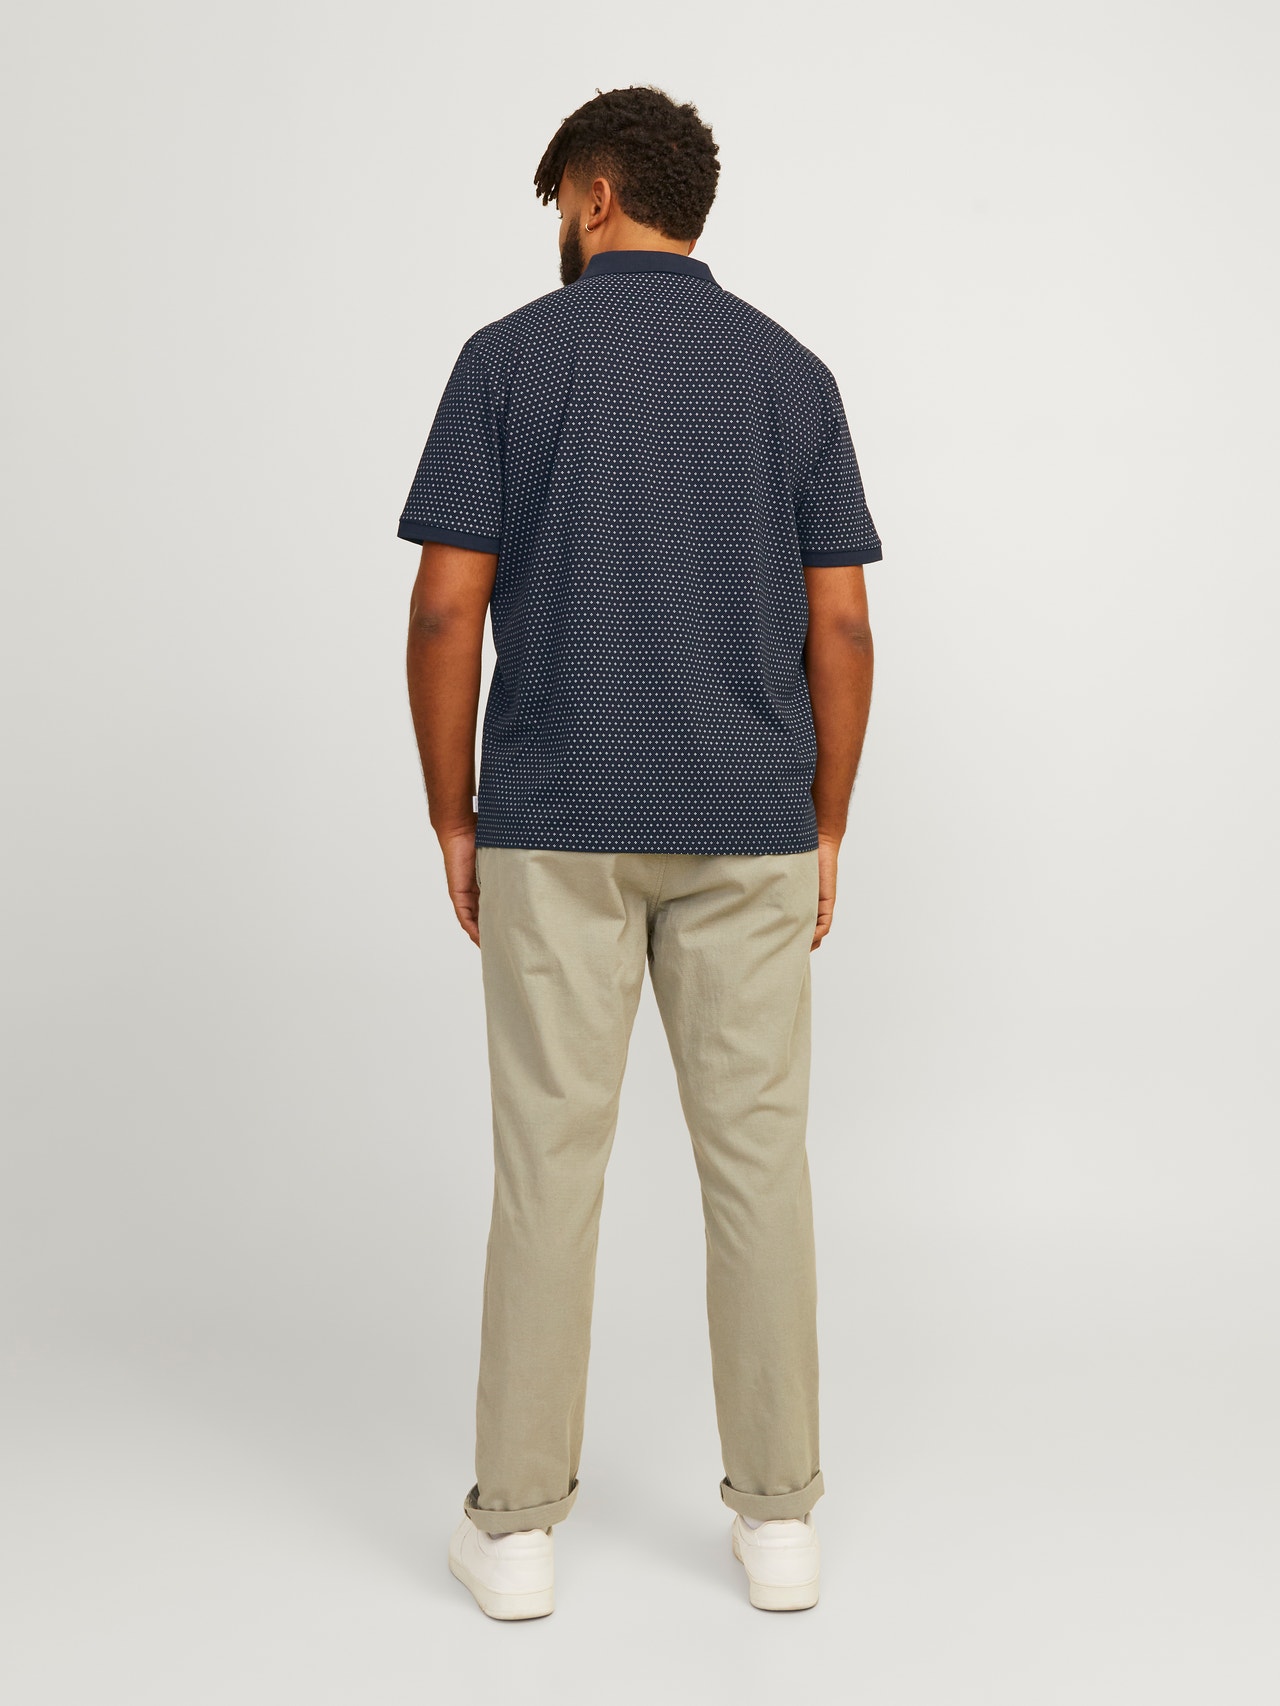 Jack & Jones Plus Size Bedrukt T-shirt -Navy Blazer - 12254901